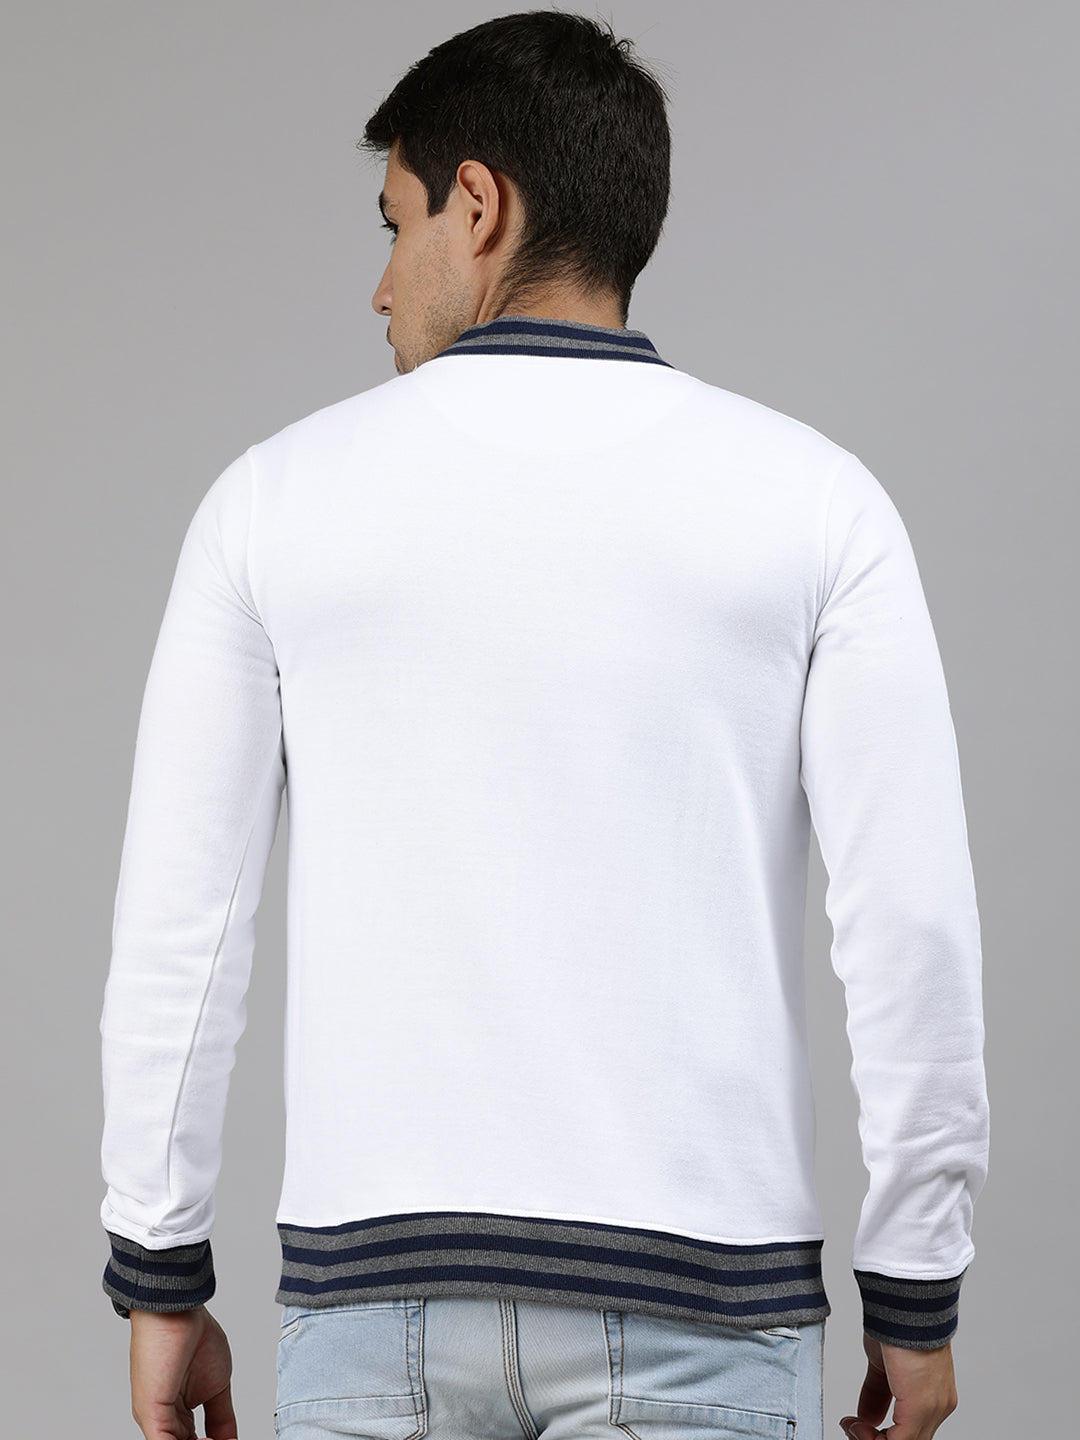 Men's White Cotton Zippered Varsity Sweatshirt